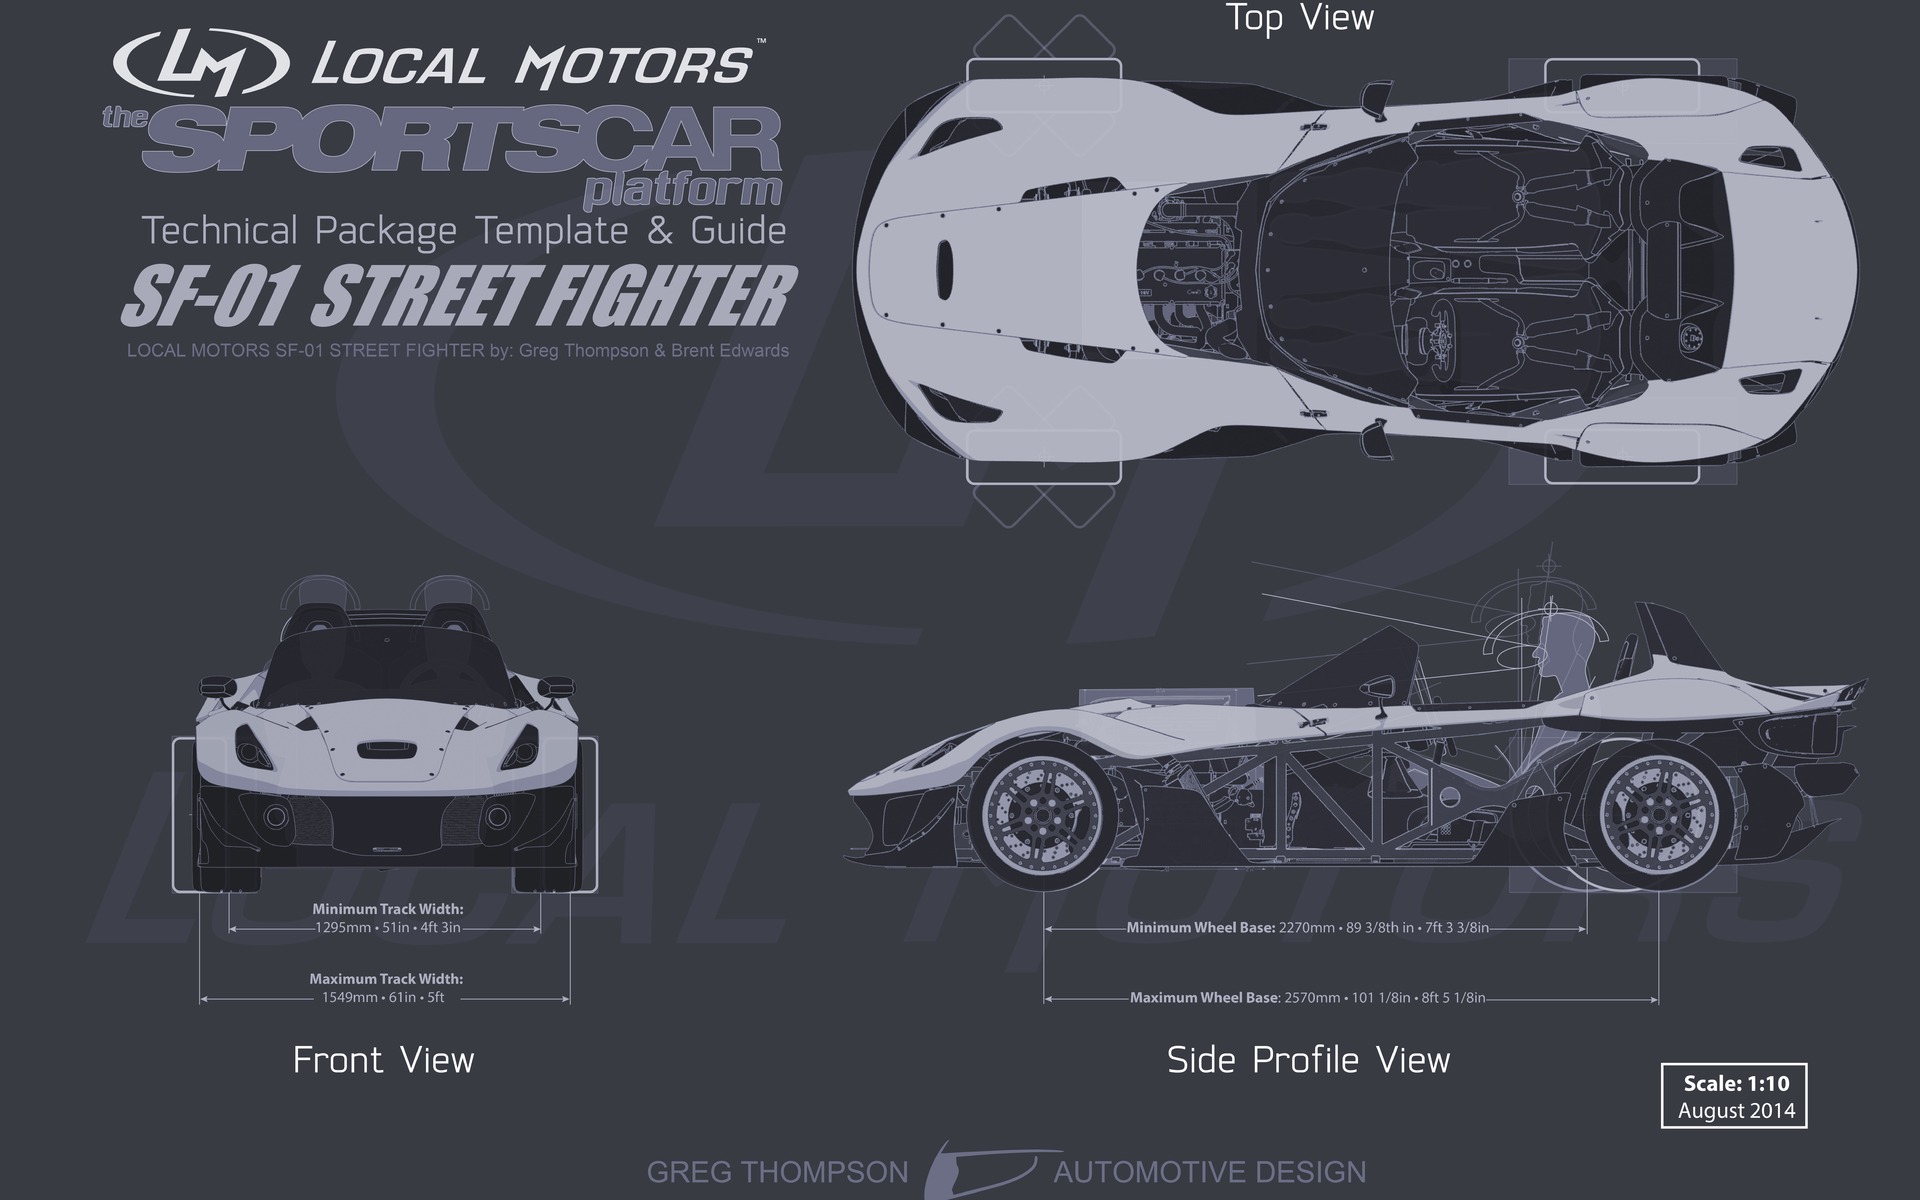 Local Motors SF-01 Street Fighter